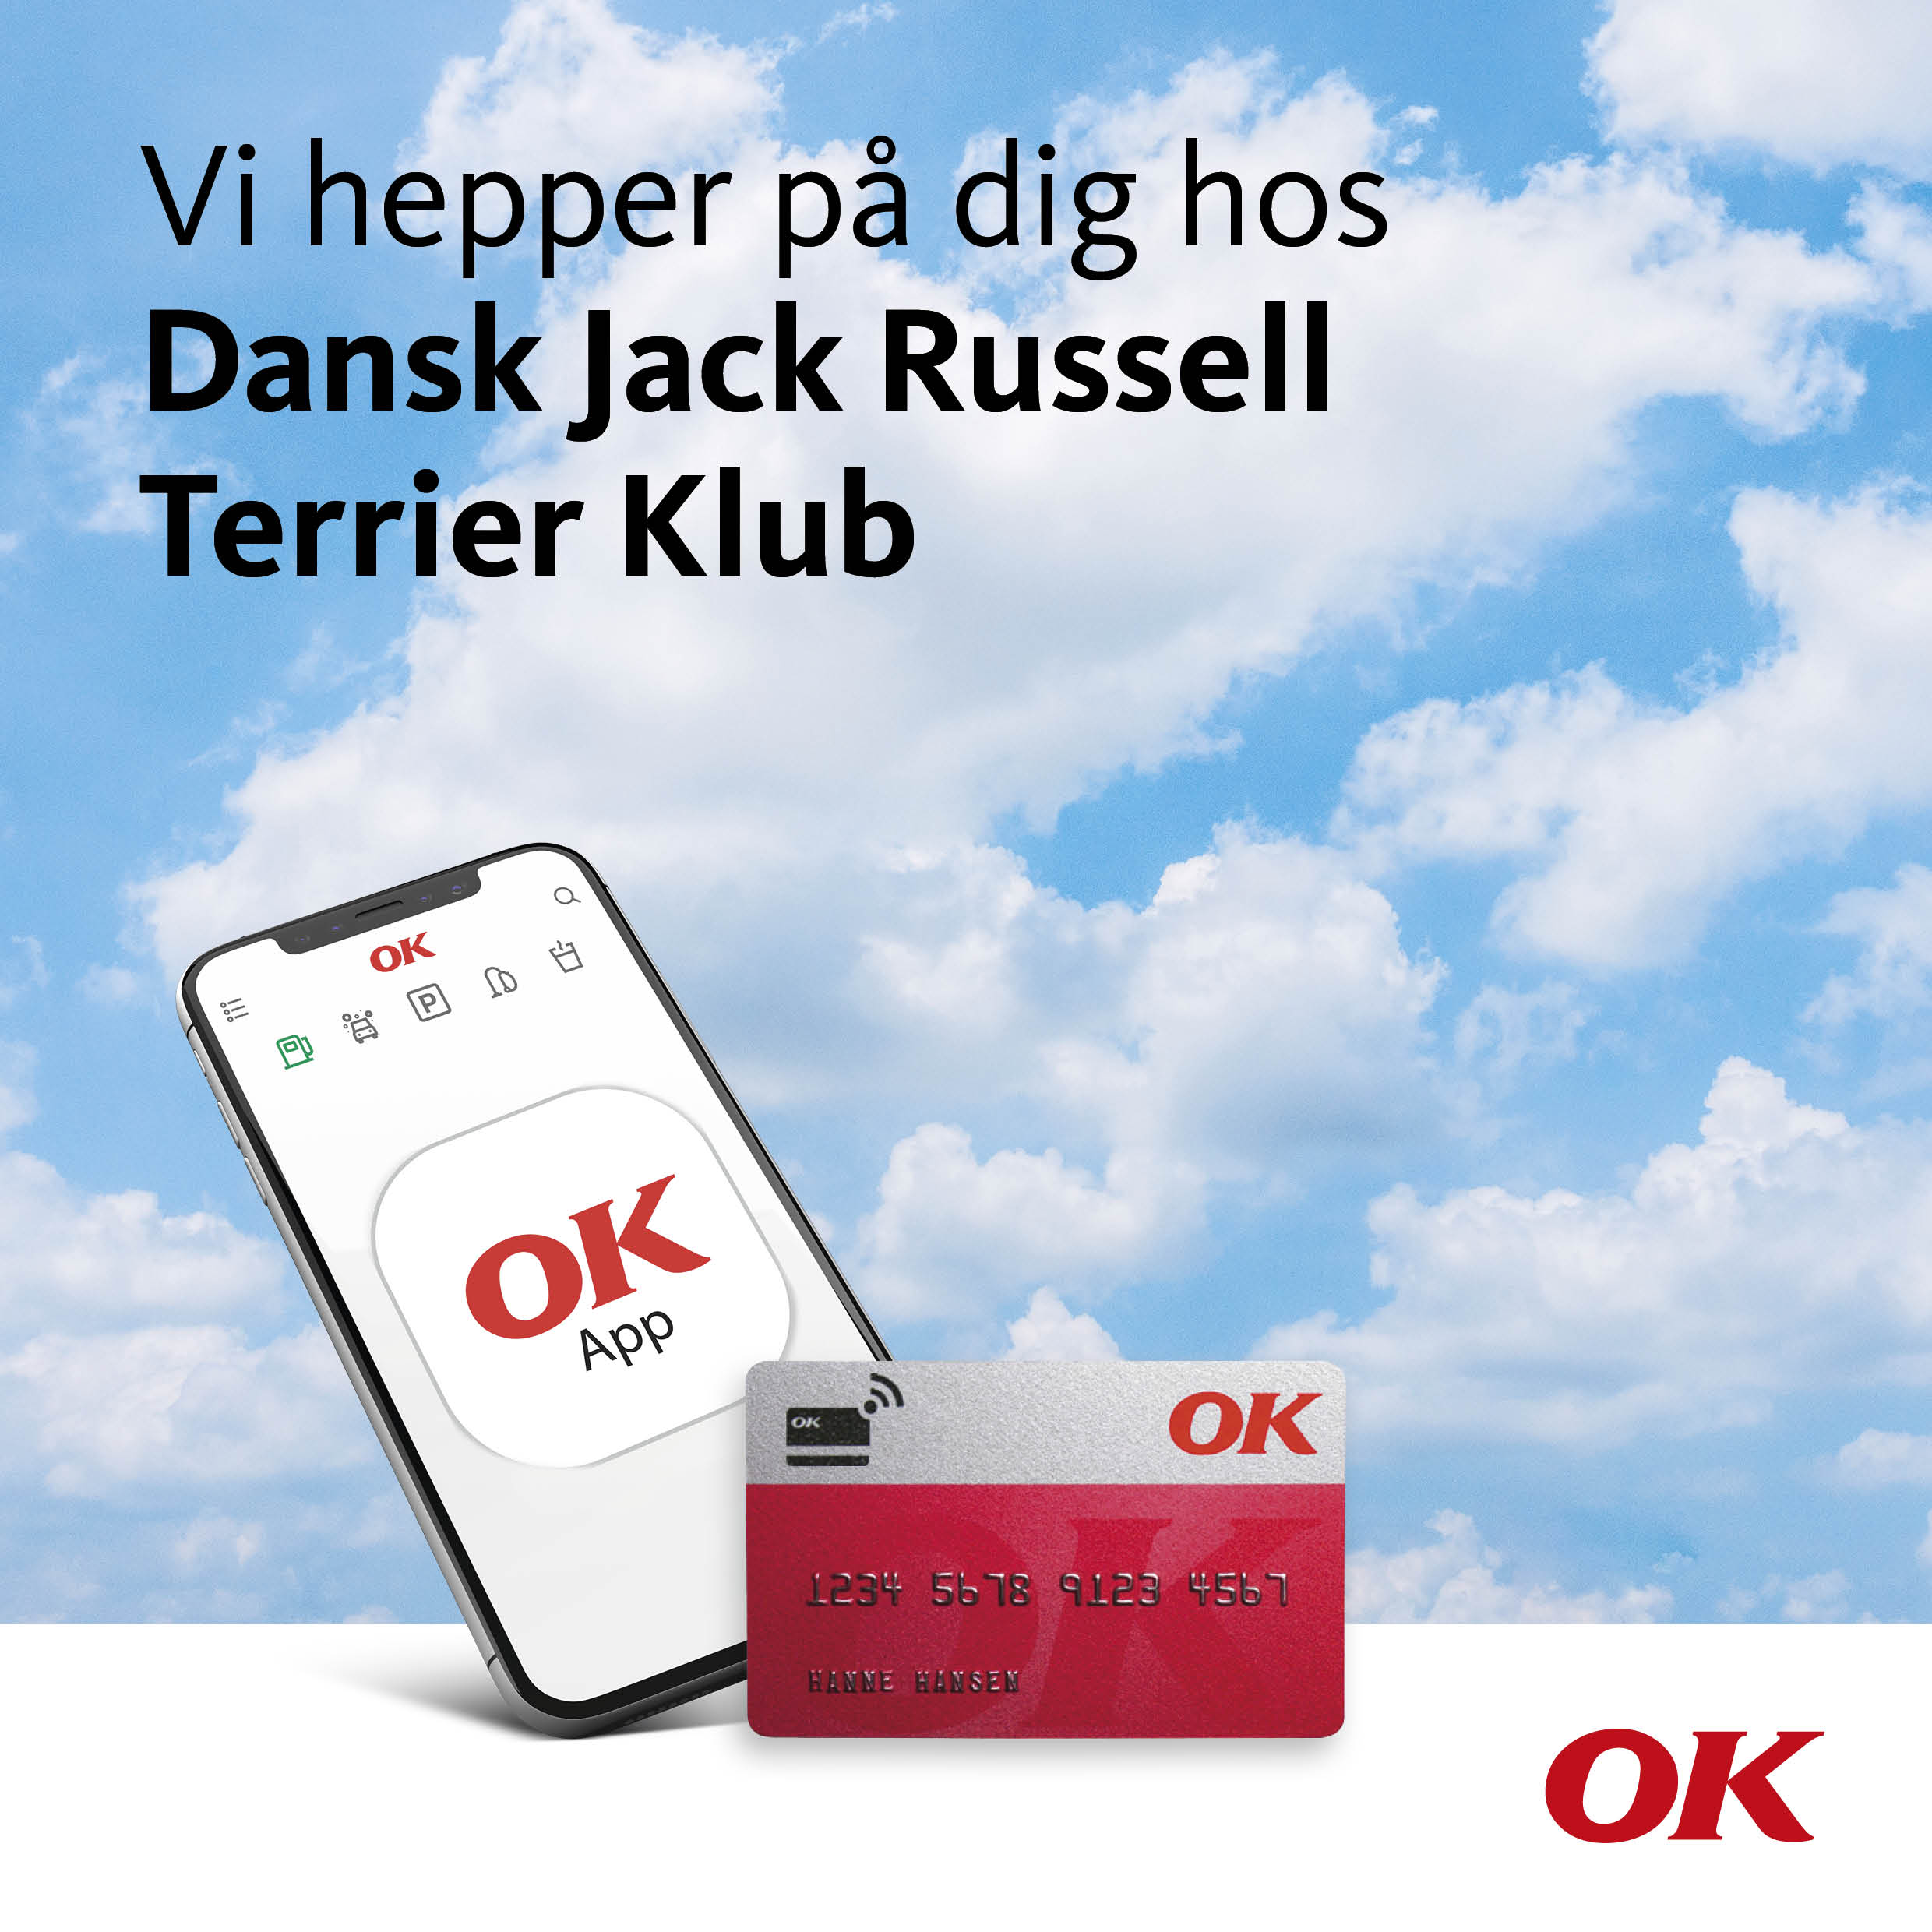 Dansk Jack Russell Terrier Klub